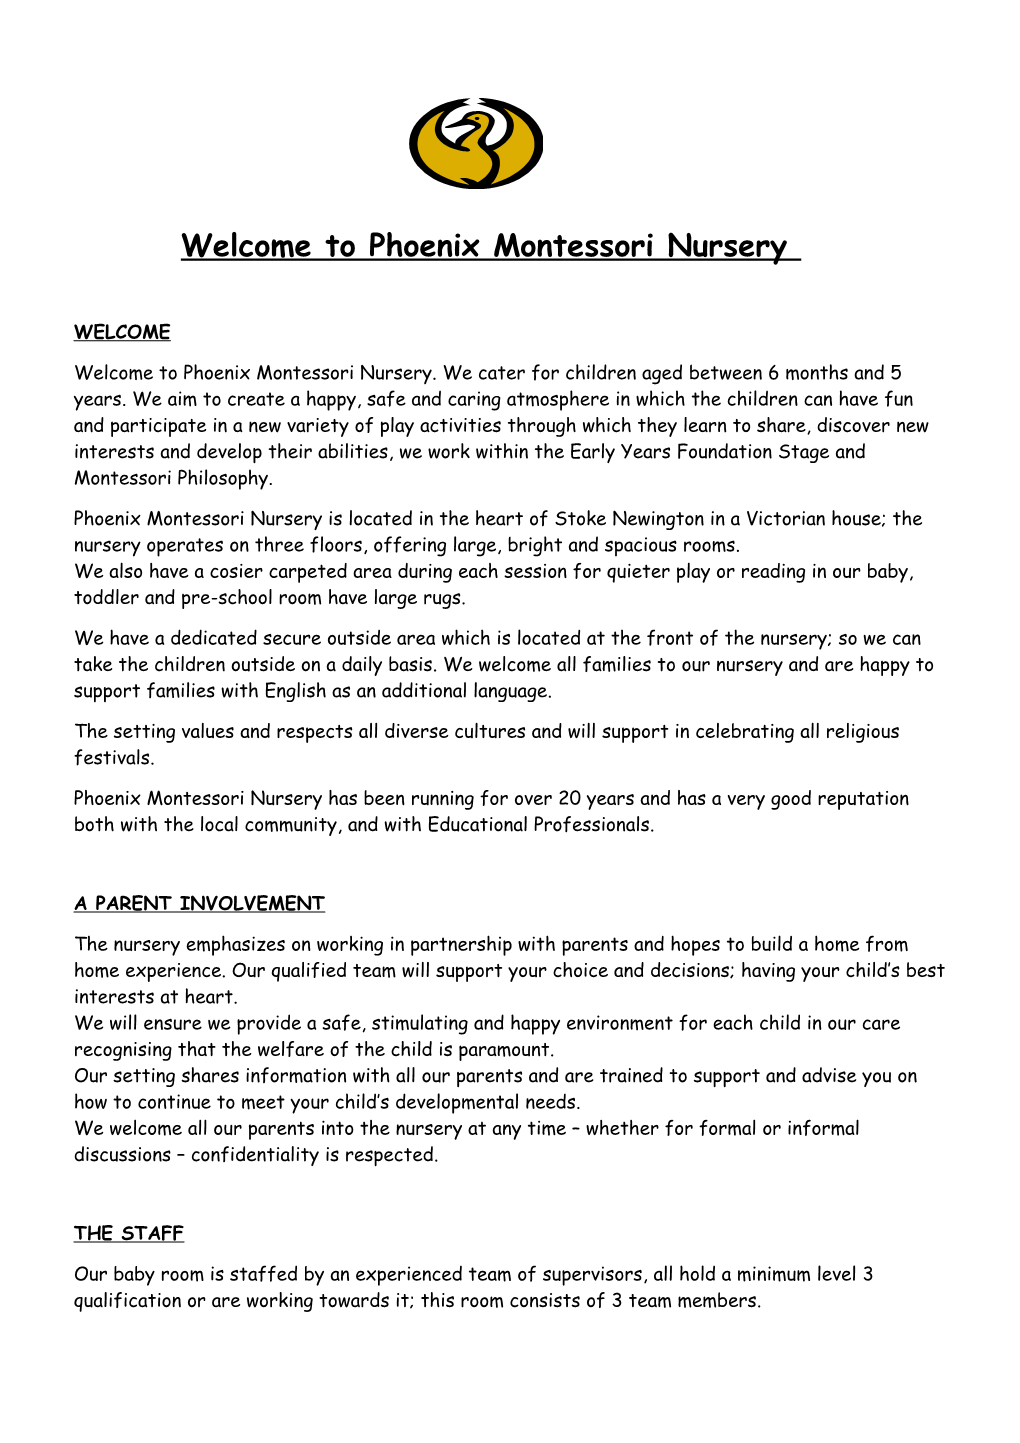 Welcome to Phoenix Montessori Nursery